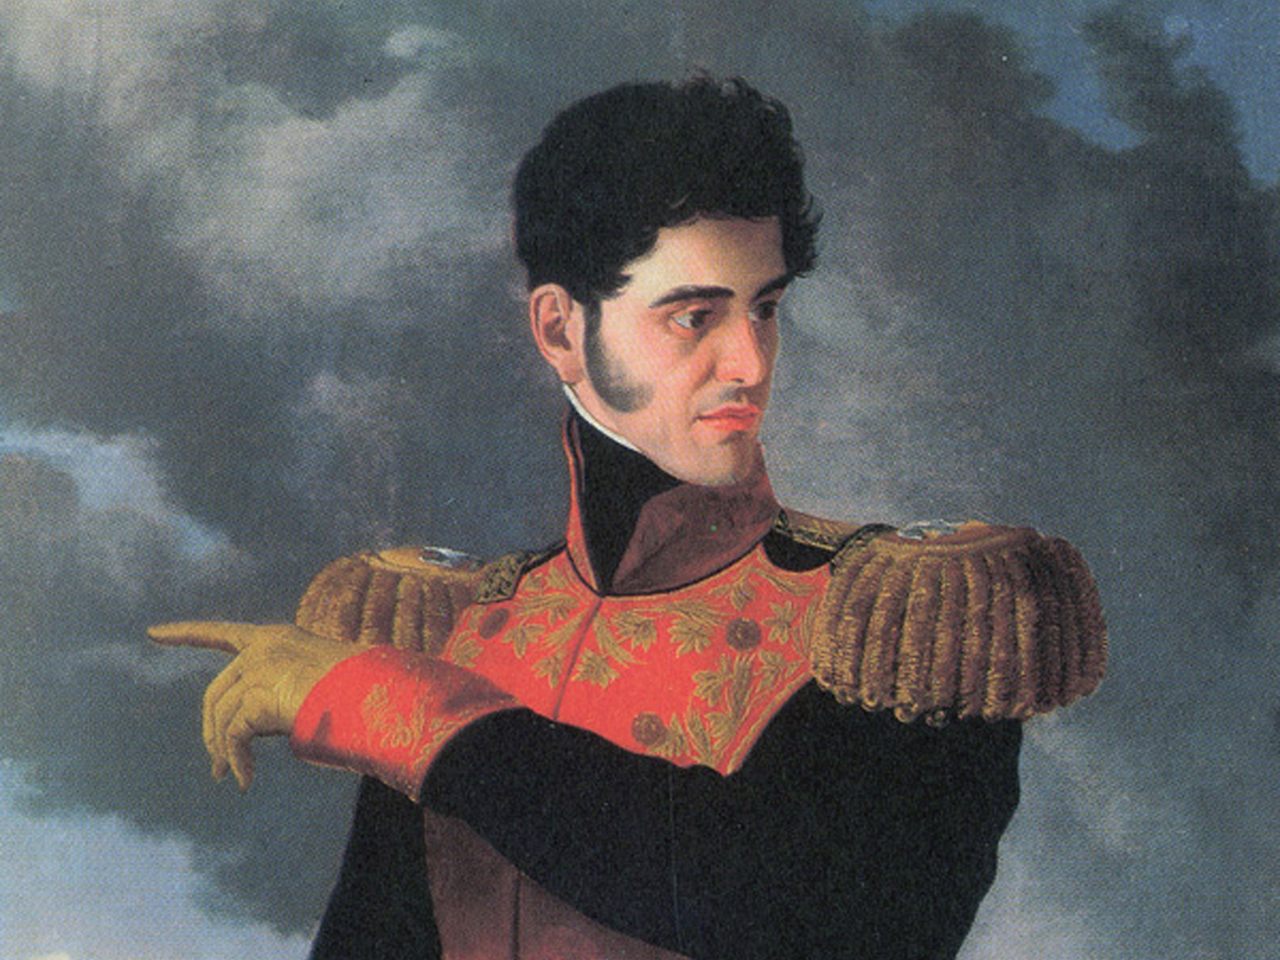 Antonio López de Santa Anna in his days as a dashing soldier, before his unglamorous exile.